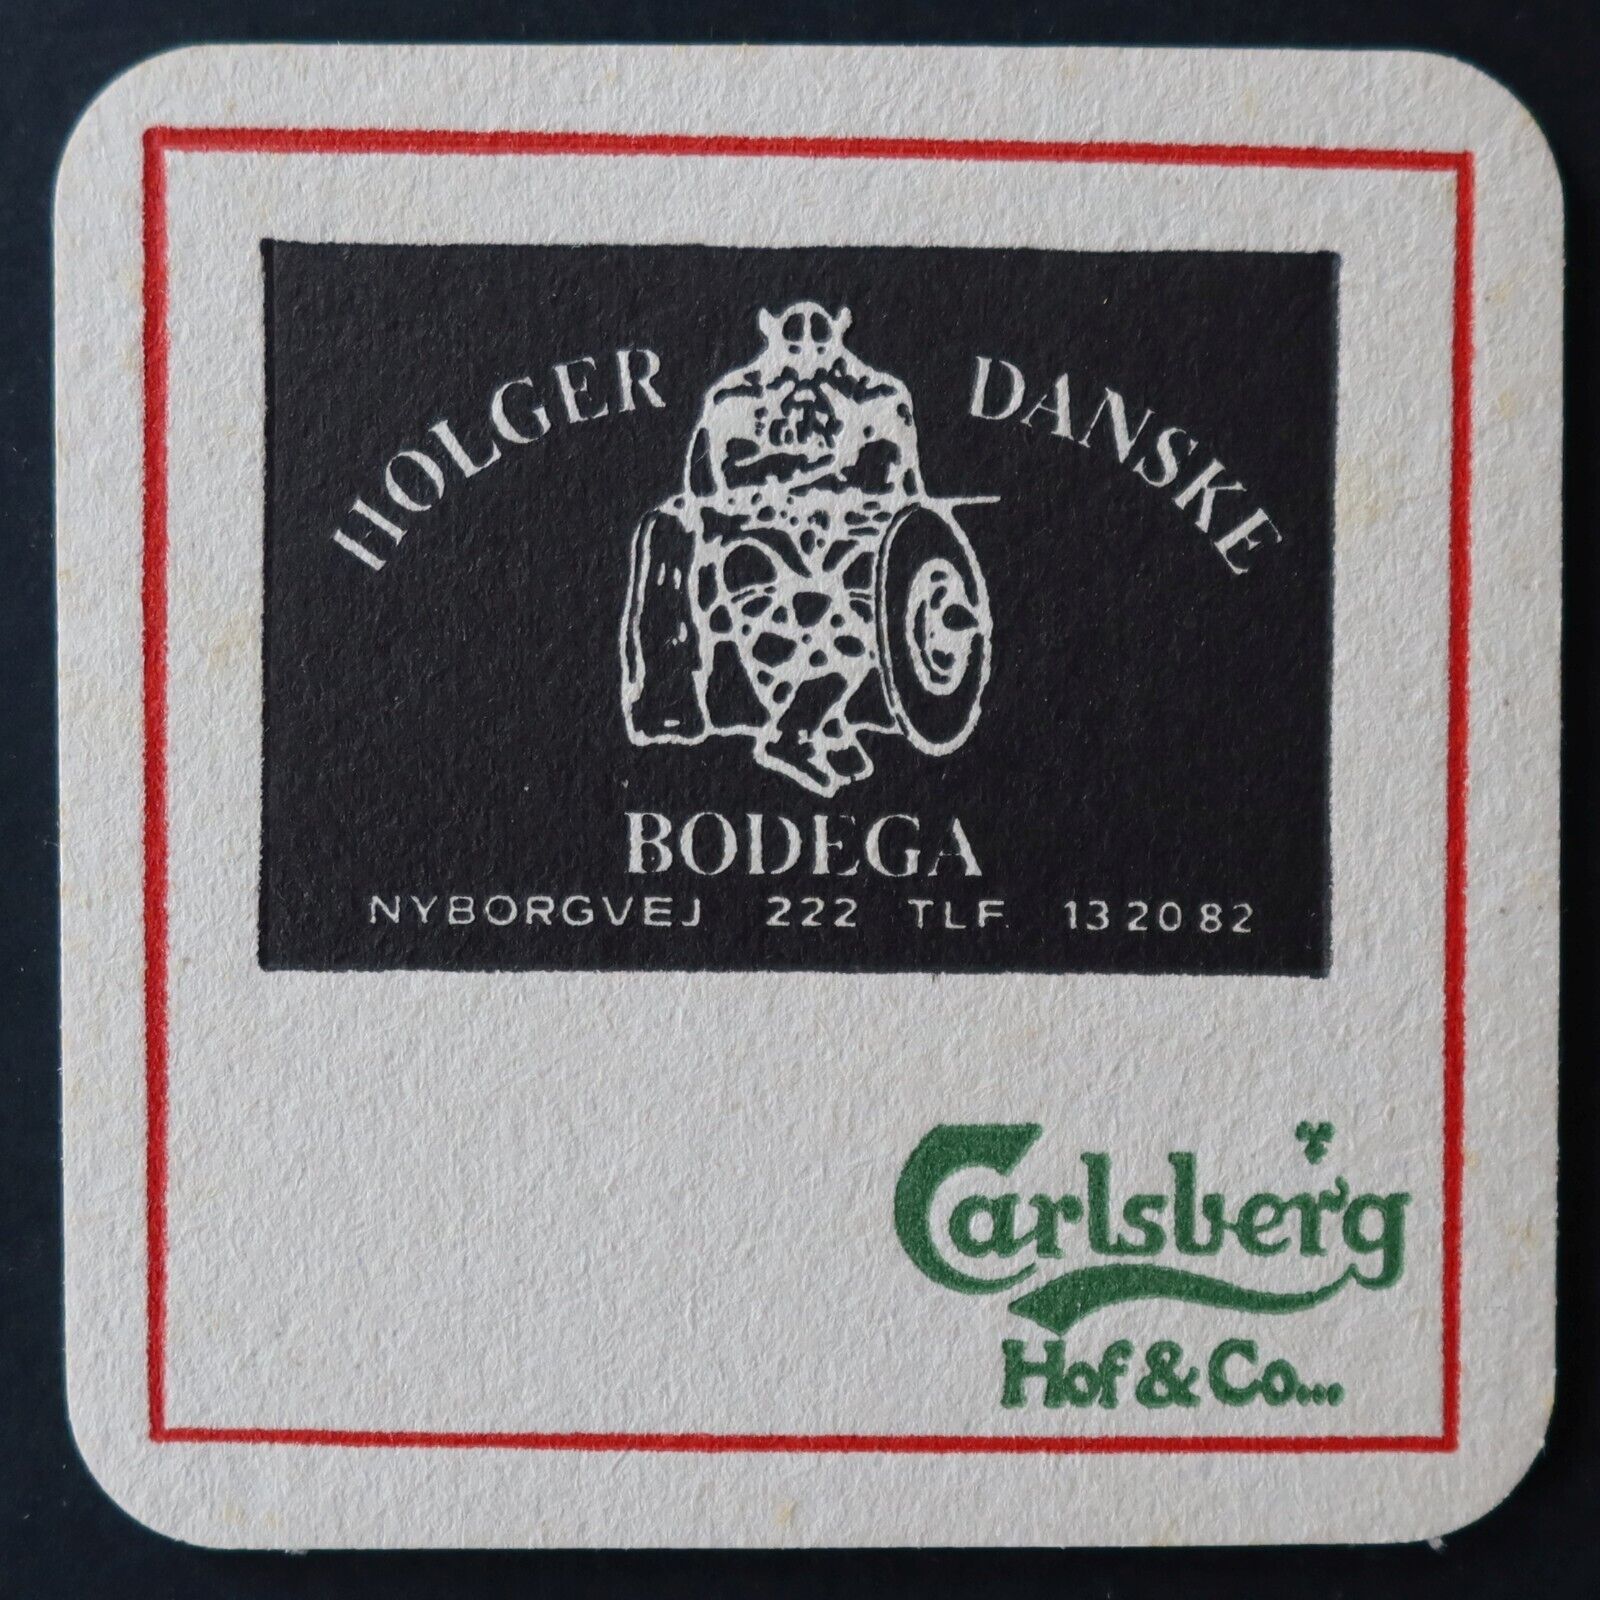 CARLSBERG Hof Bodega Holger Danske Nyborgvej beer underbock coaster 1